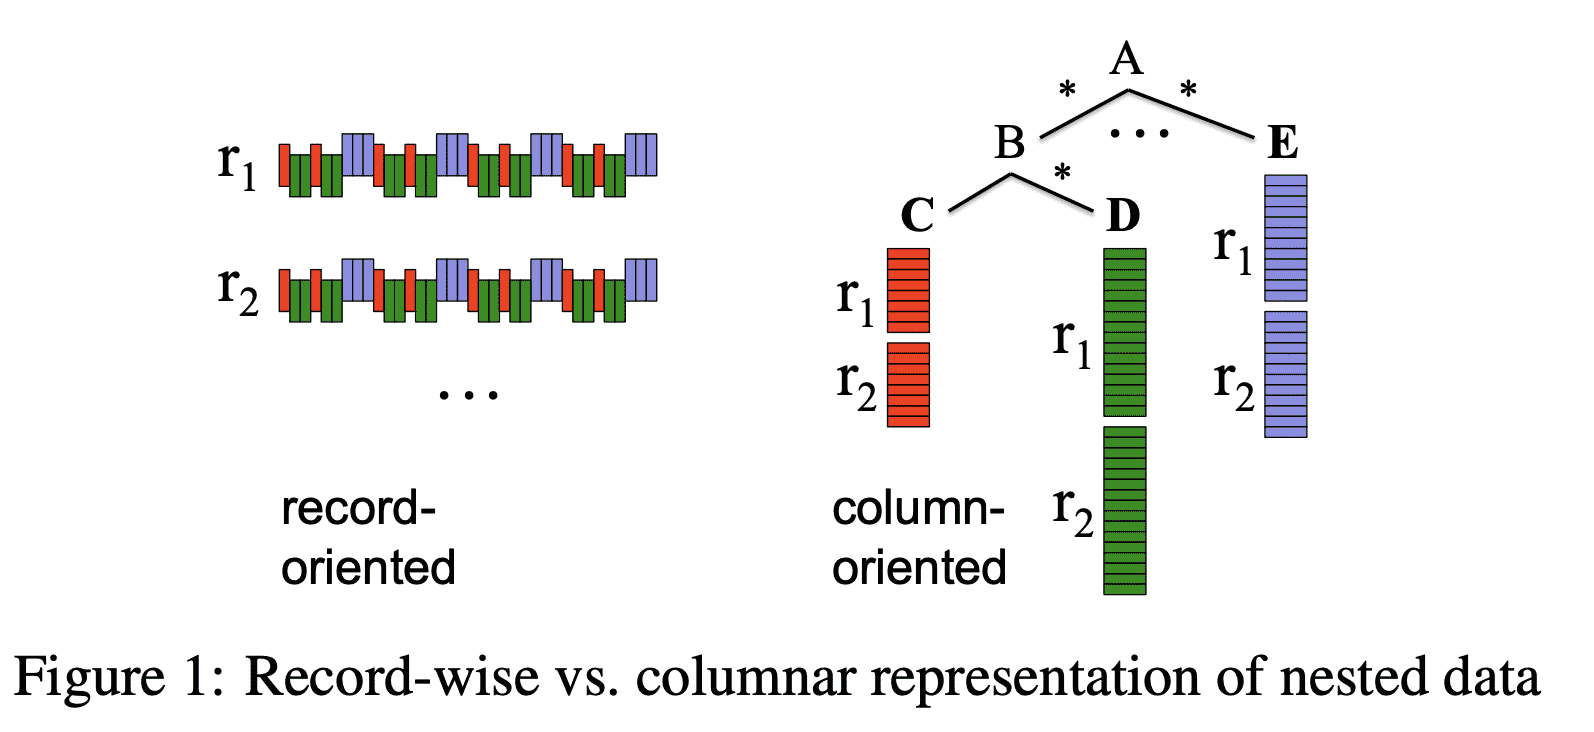 Record-wise vs columnar representation of nested data